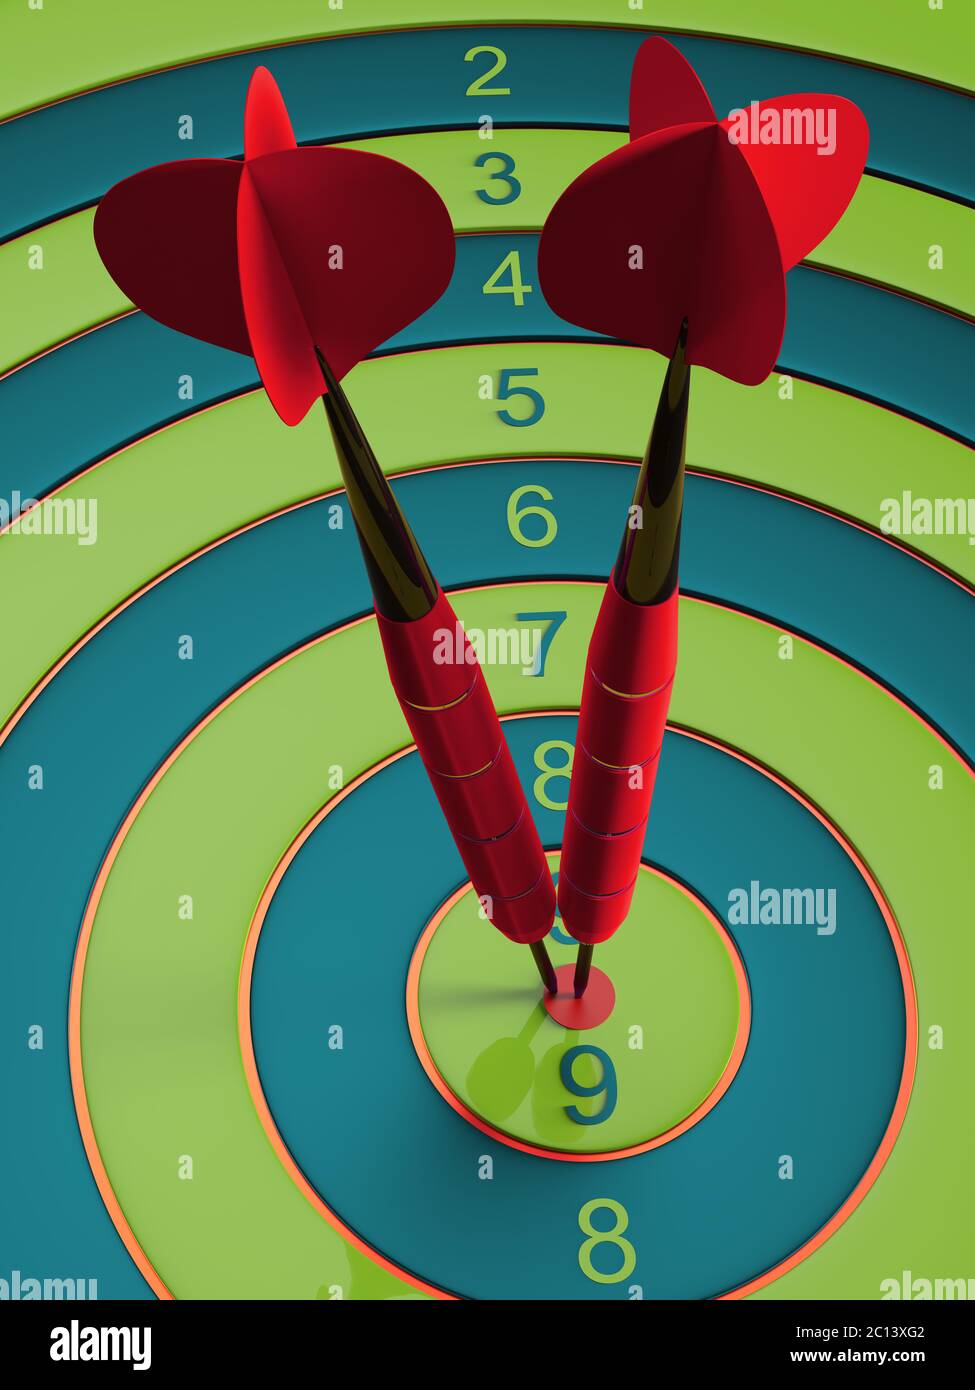 Two darts hitting the bullseye aim. concept of success 3d illustration Stock Photo